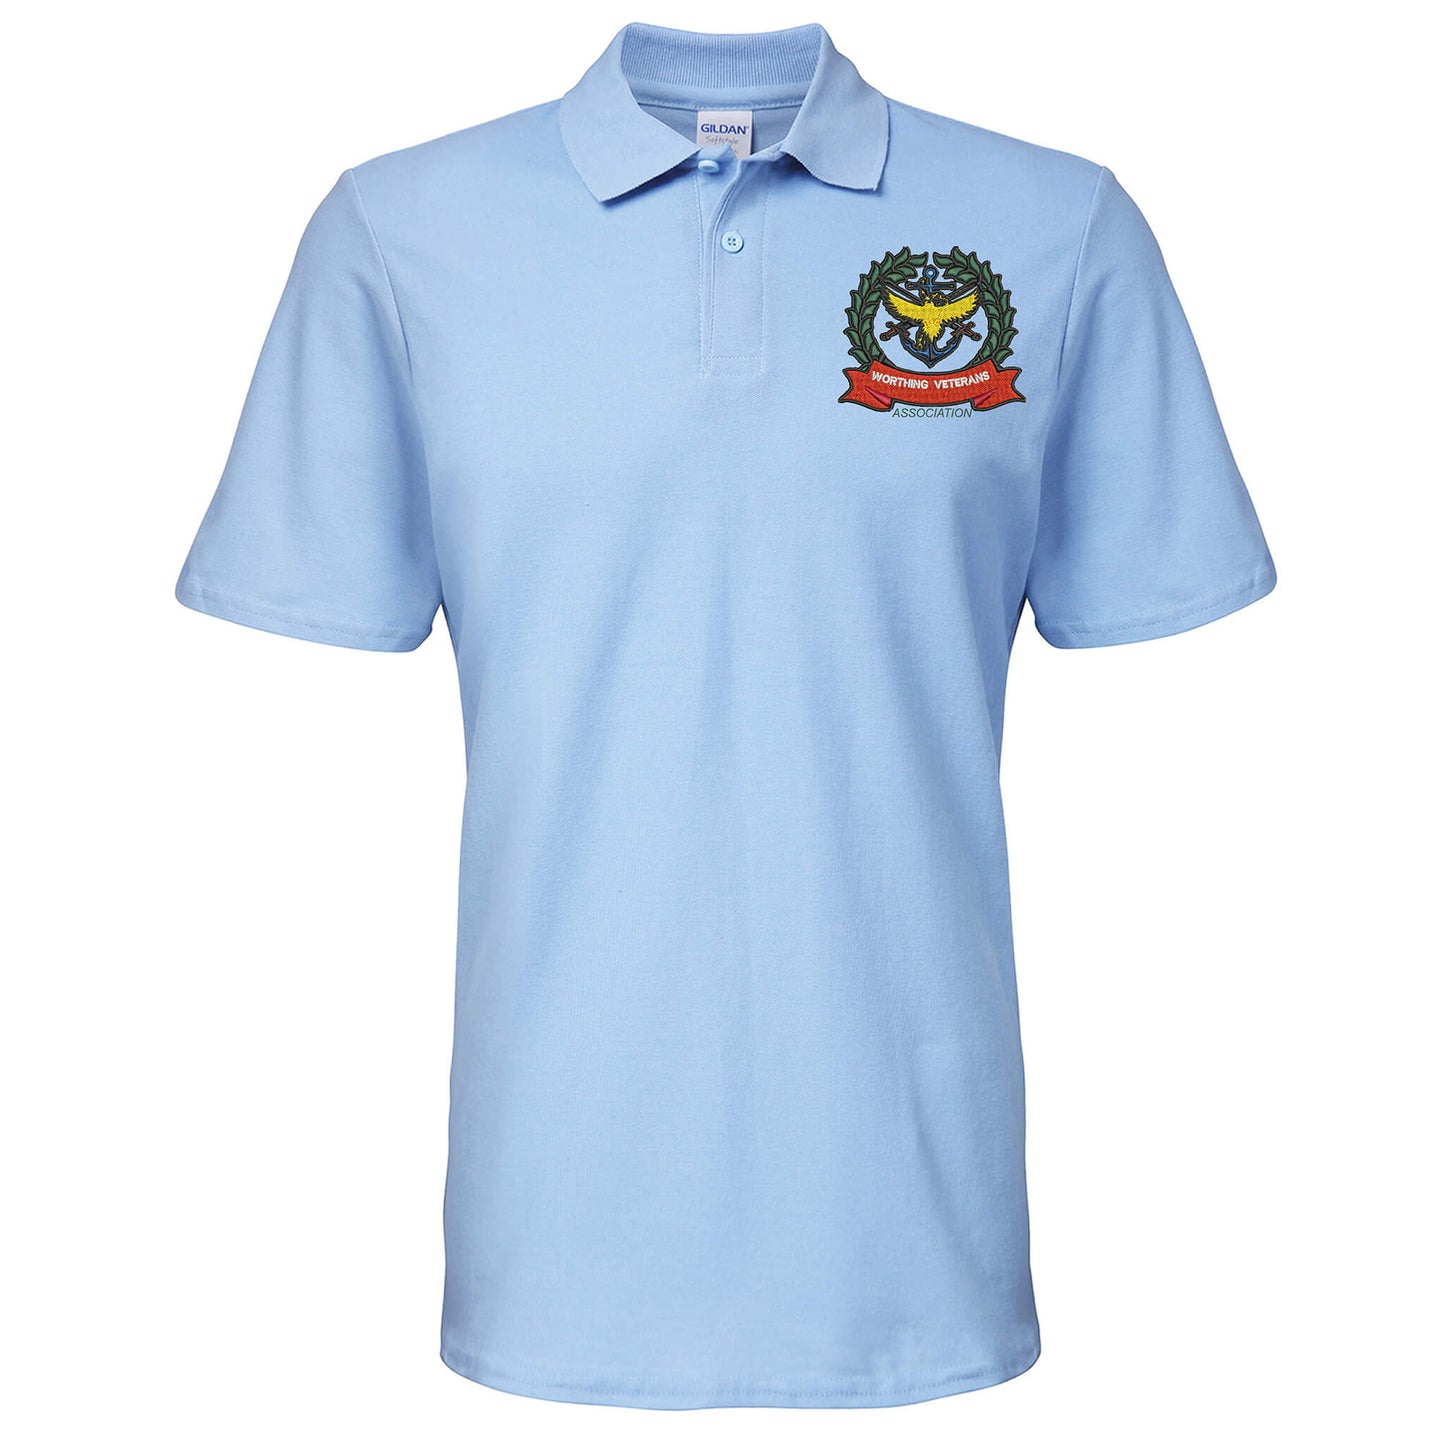 Worthing Veterans Association Sports Polo Shirt